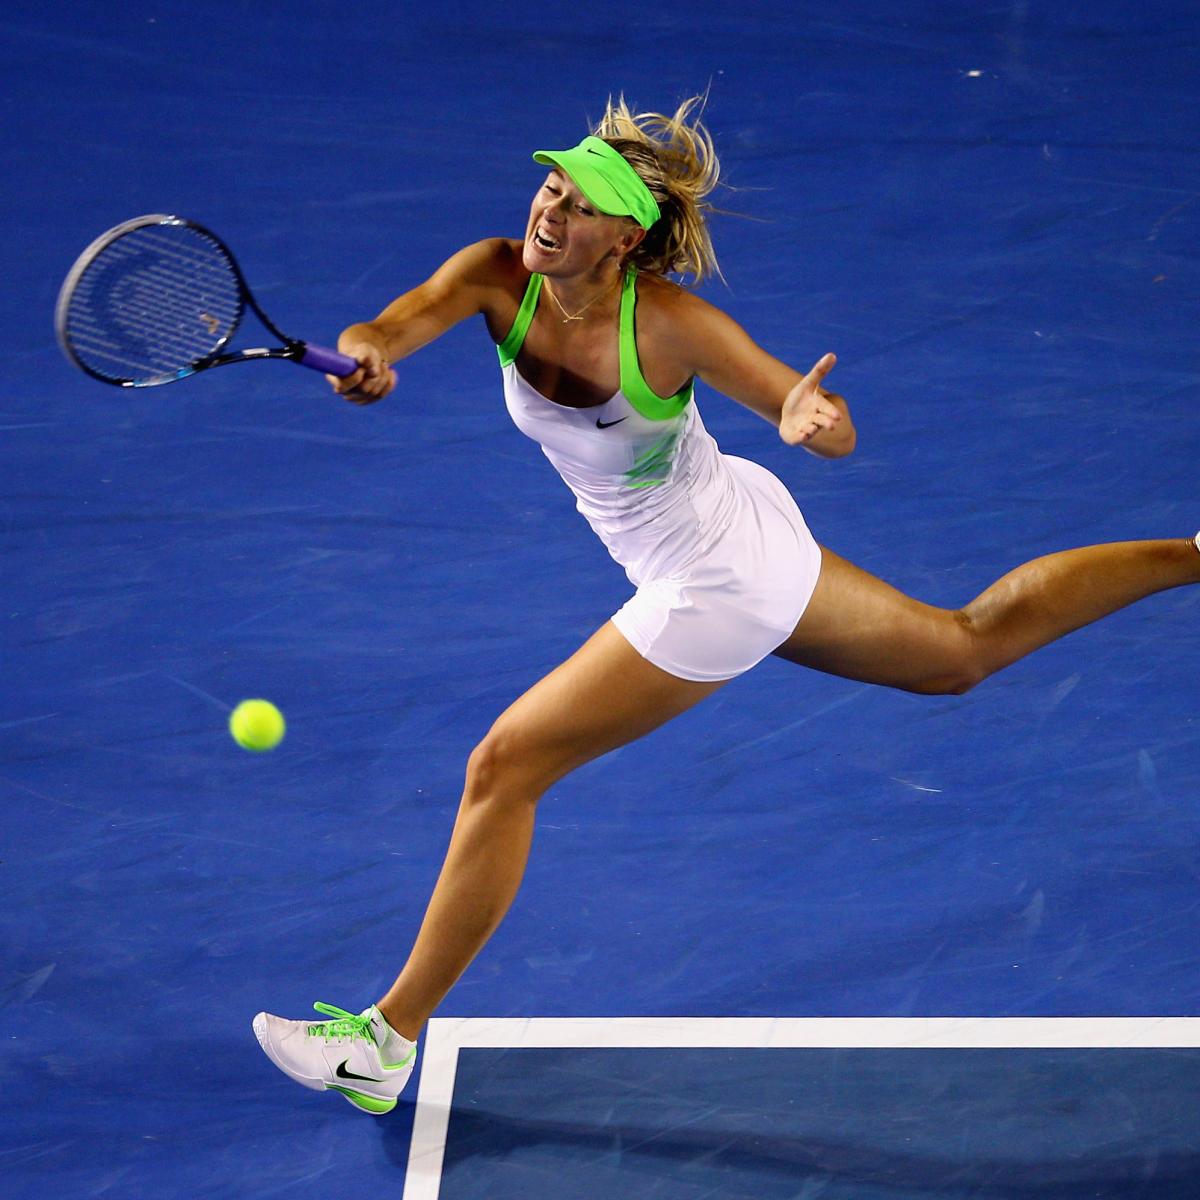 Australian Open 2012 Scores: Jan. 23 Scores and Results Summary | Bleacher Report ...